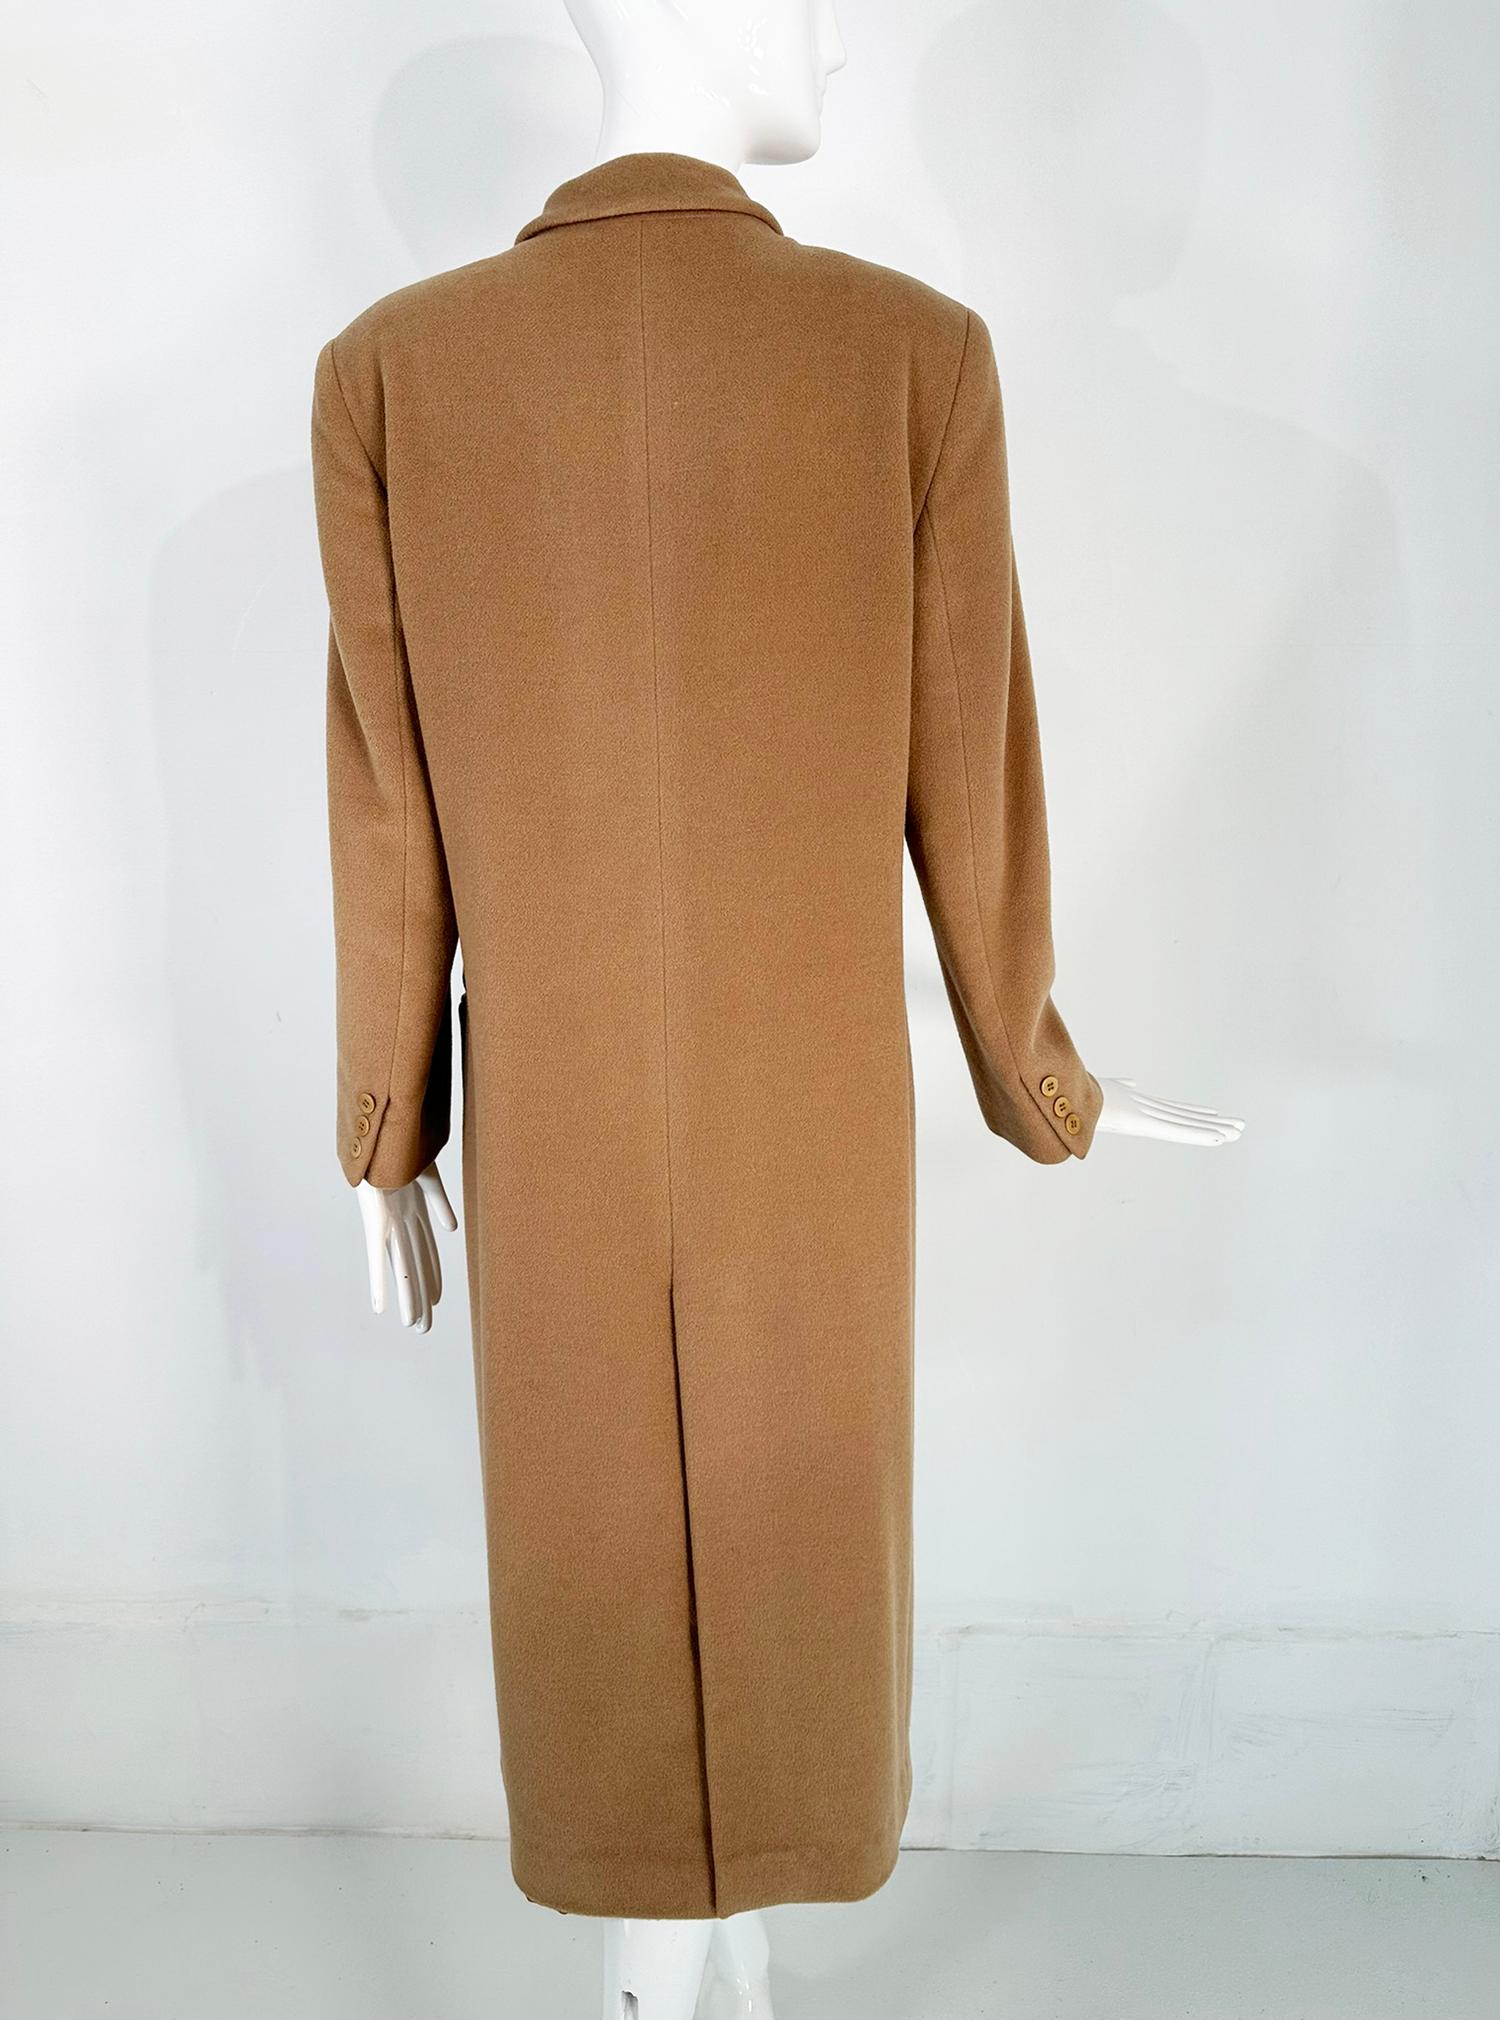 Giorgio Armani Camel Hair Classic Double Breasted Coat 1990s For Sale 4